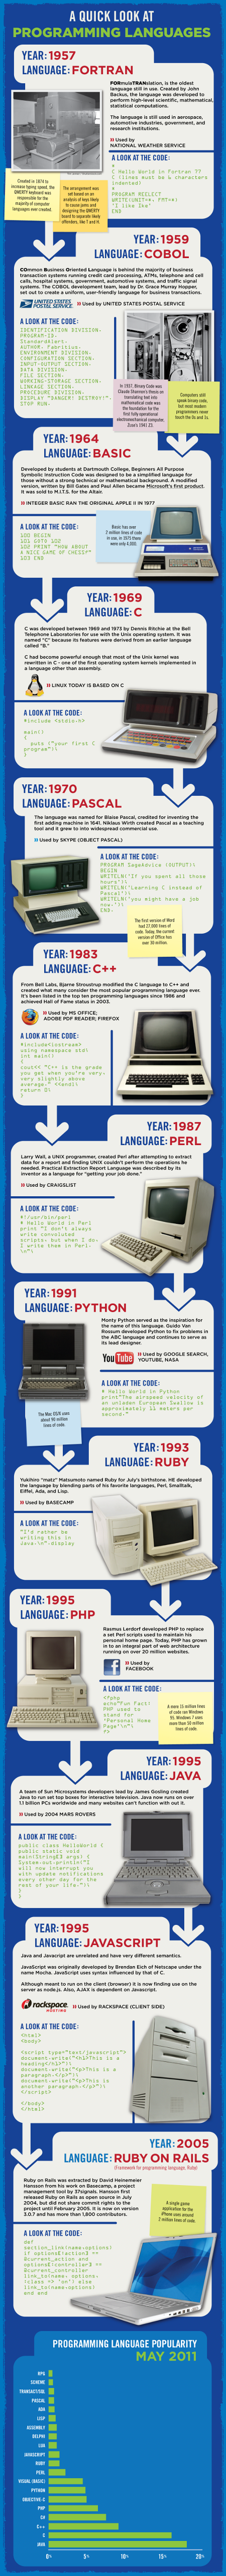 Evolution of Computer Languages